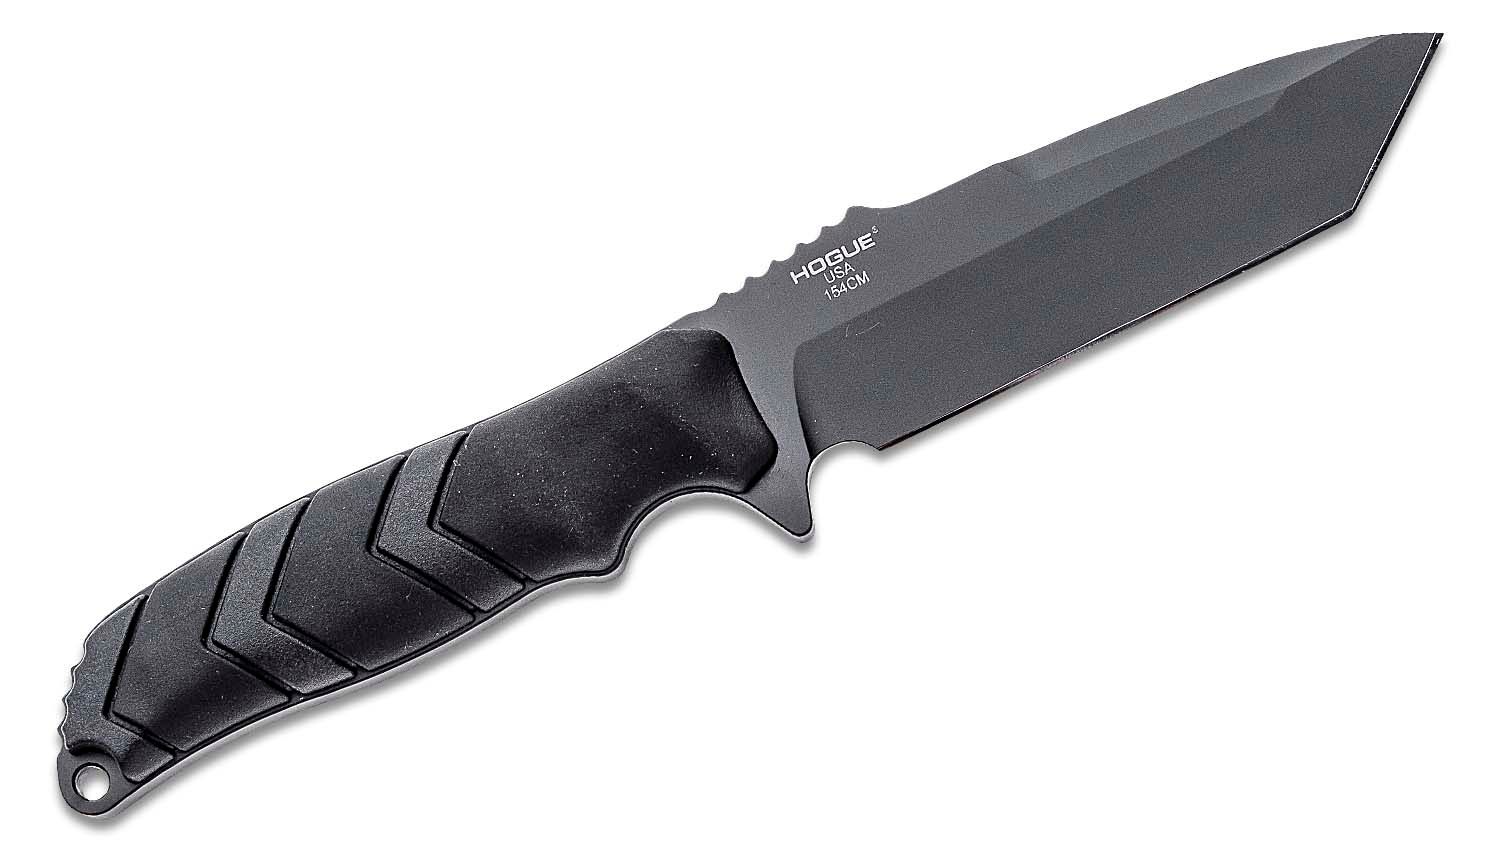 Striking black bladed tsunami fishing knife with sheath : r/NormalKnives